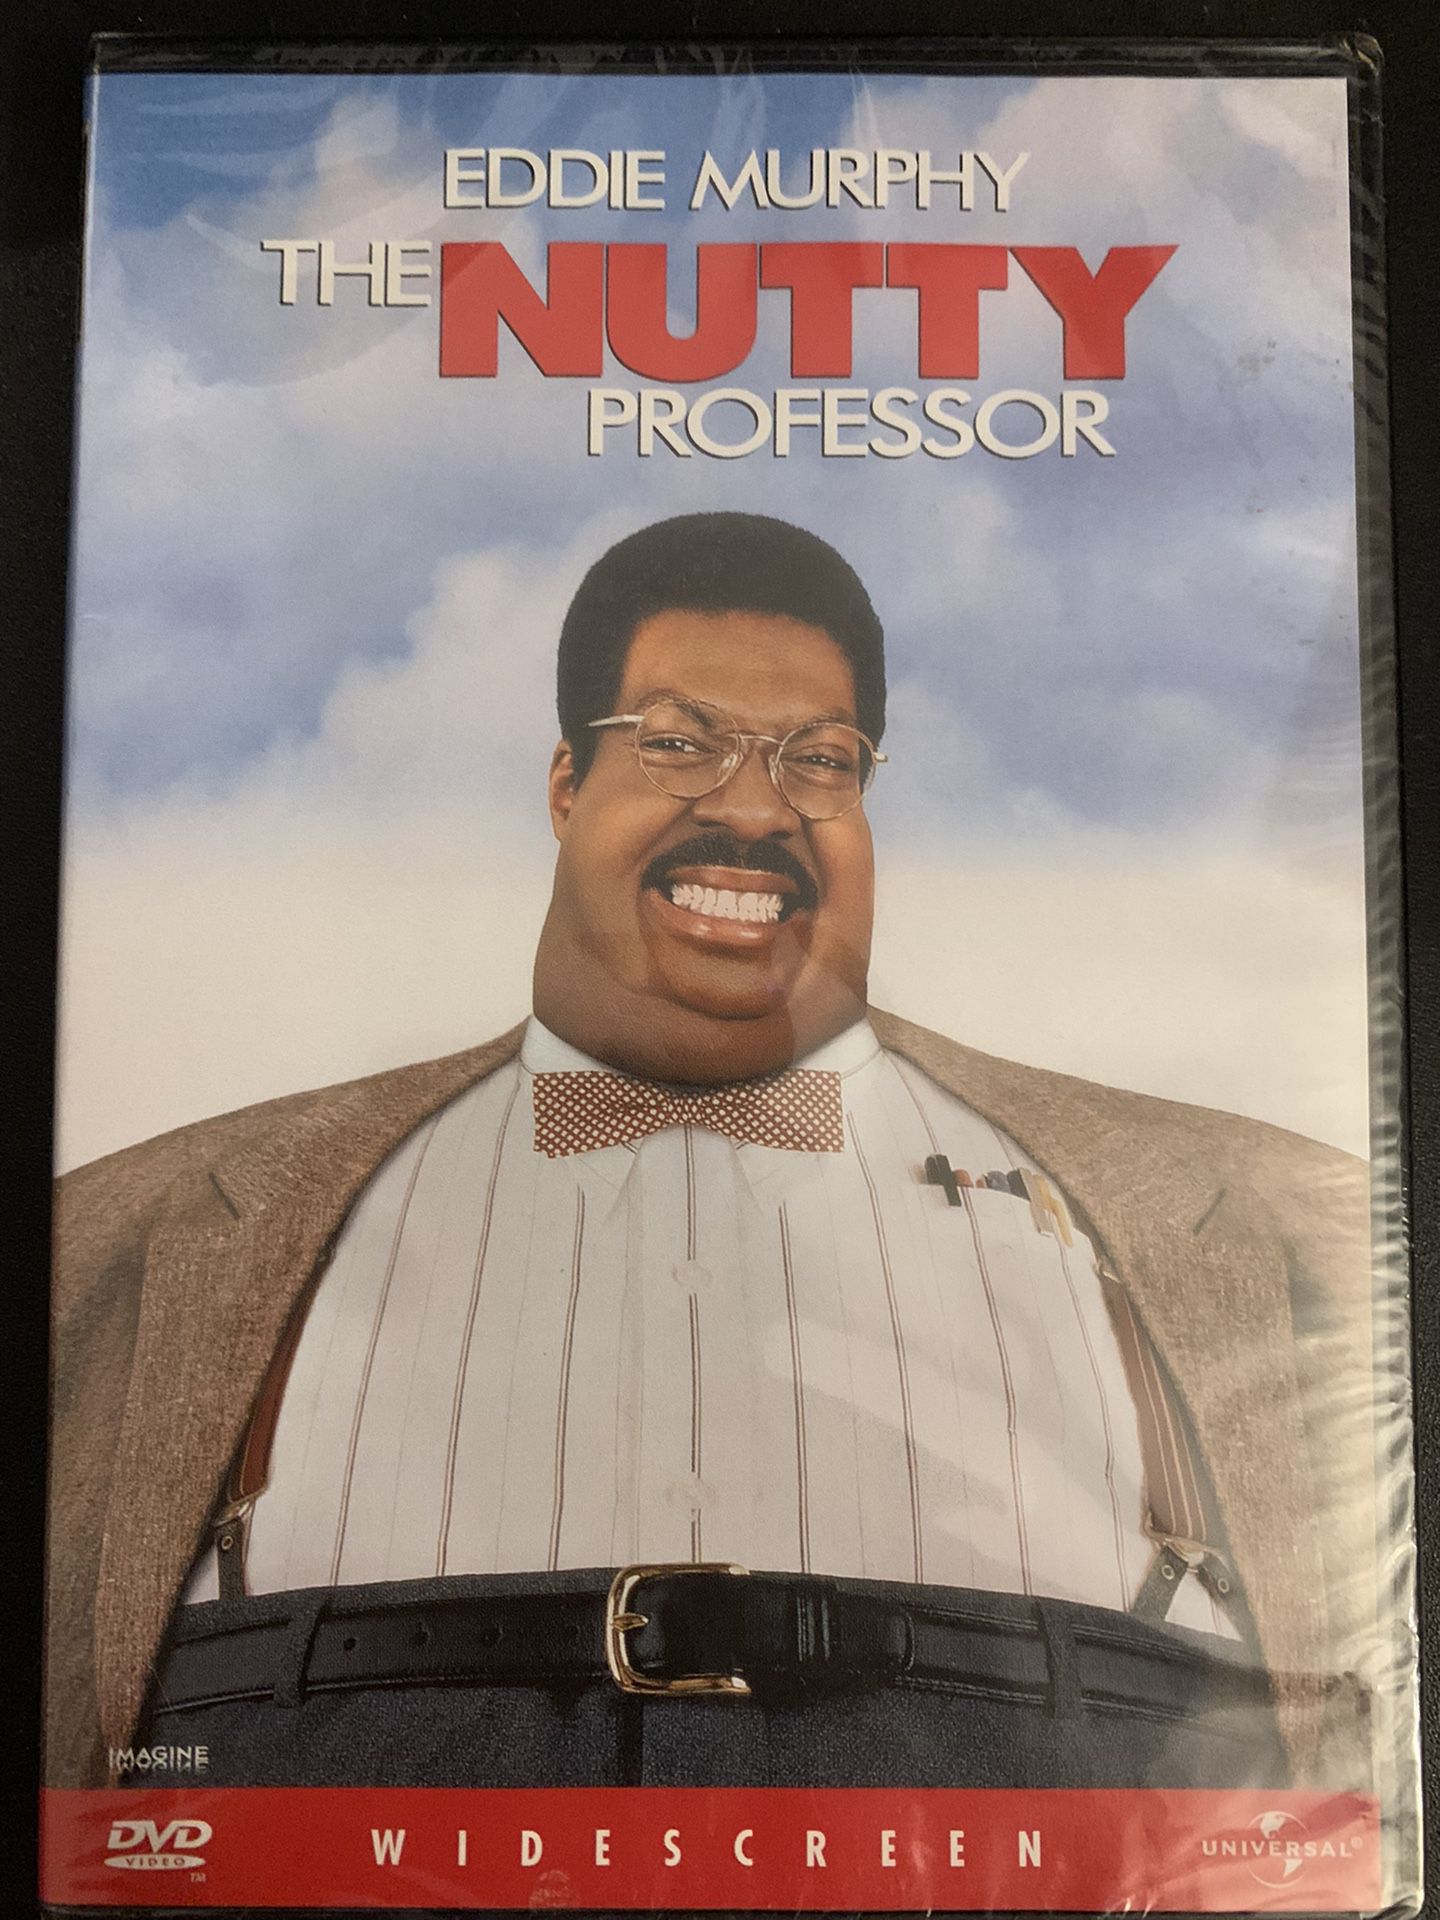 The NUTTY PROFESSOR (DVD-1996) NEW! Eddie Murphy! 